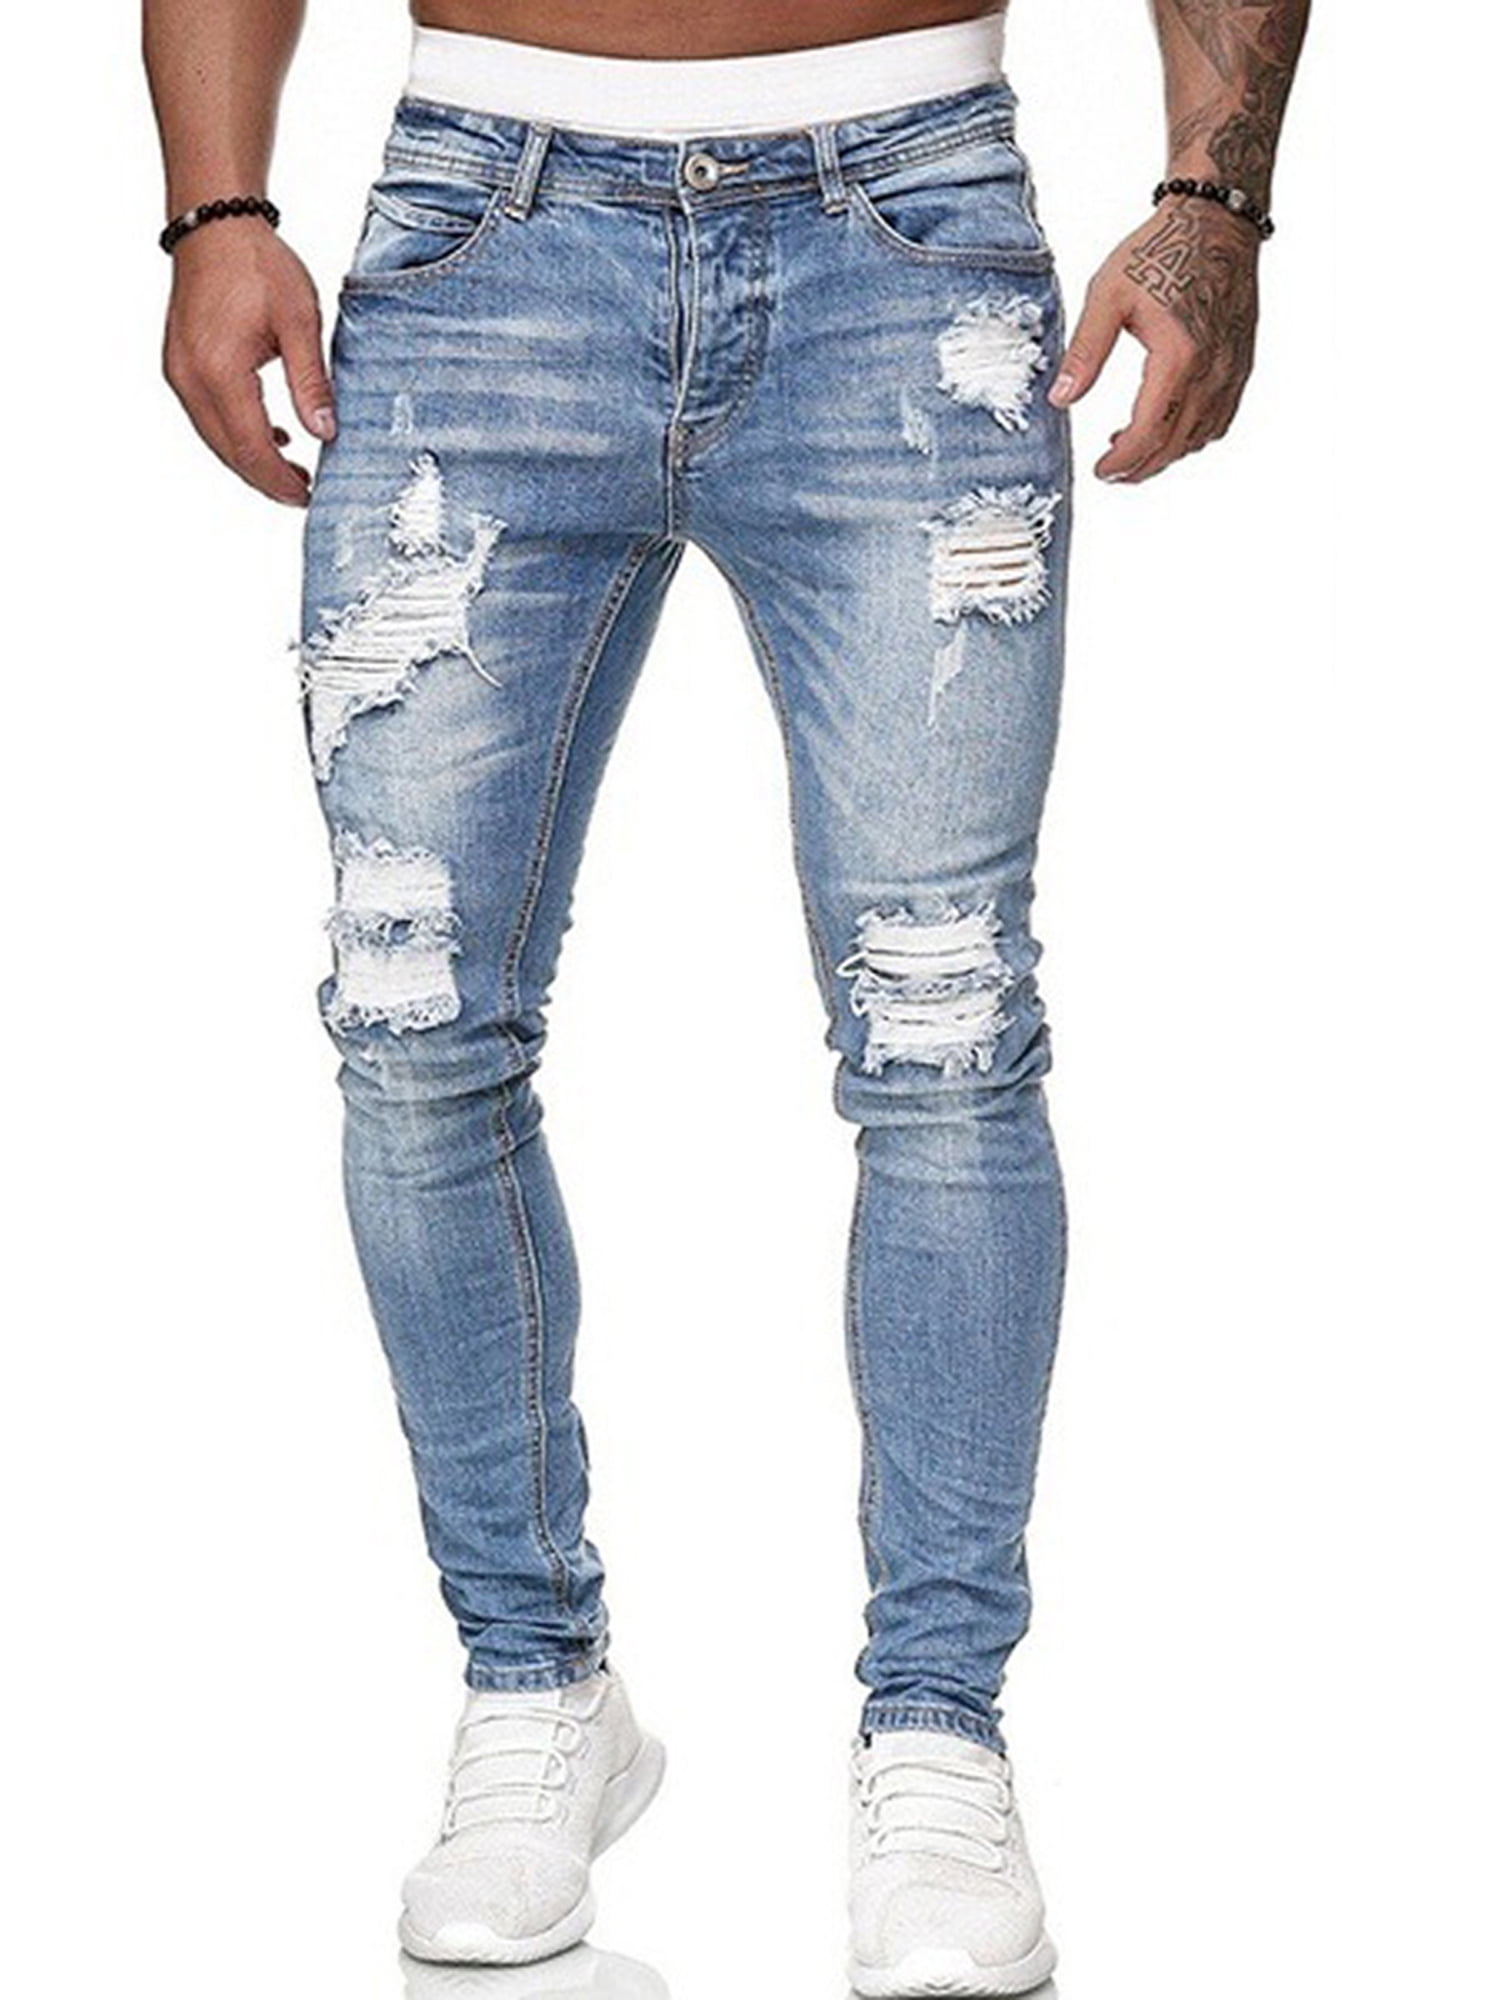 JBEELATE Men's Skinny Jeans Fit Patchwork Jeans Ripped Holes Denim Pants Stretchy Biker Jeans - Walmart.com